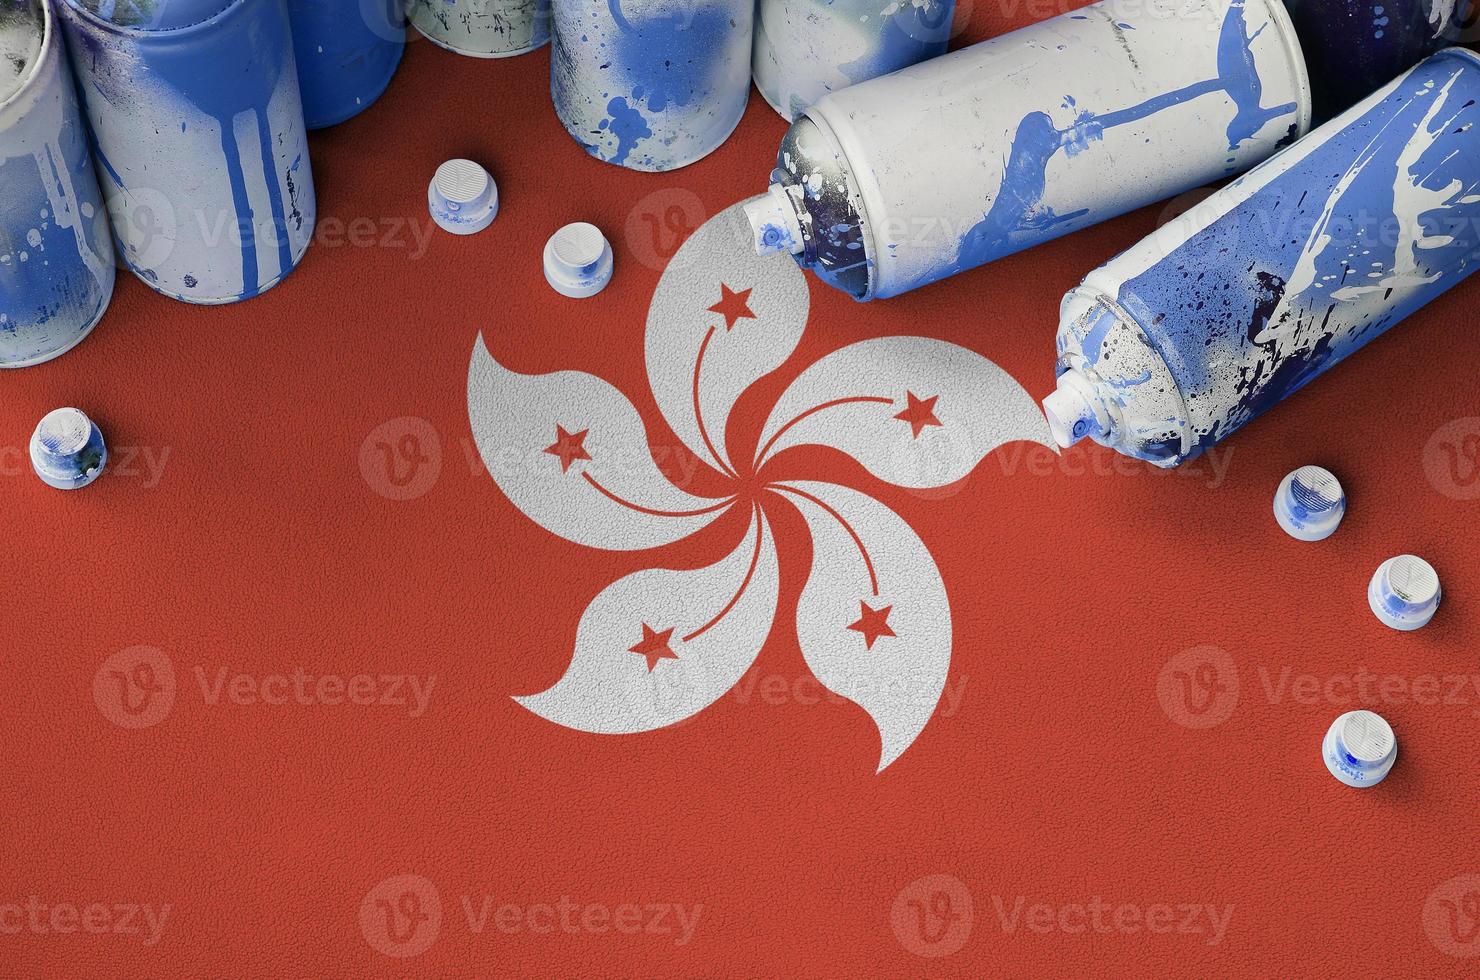 bandeira de hong kong e algumas latas de spray aerossol usadas para pintura de graffiti. conceito de cultura de arte de rua foto